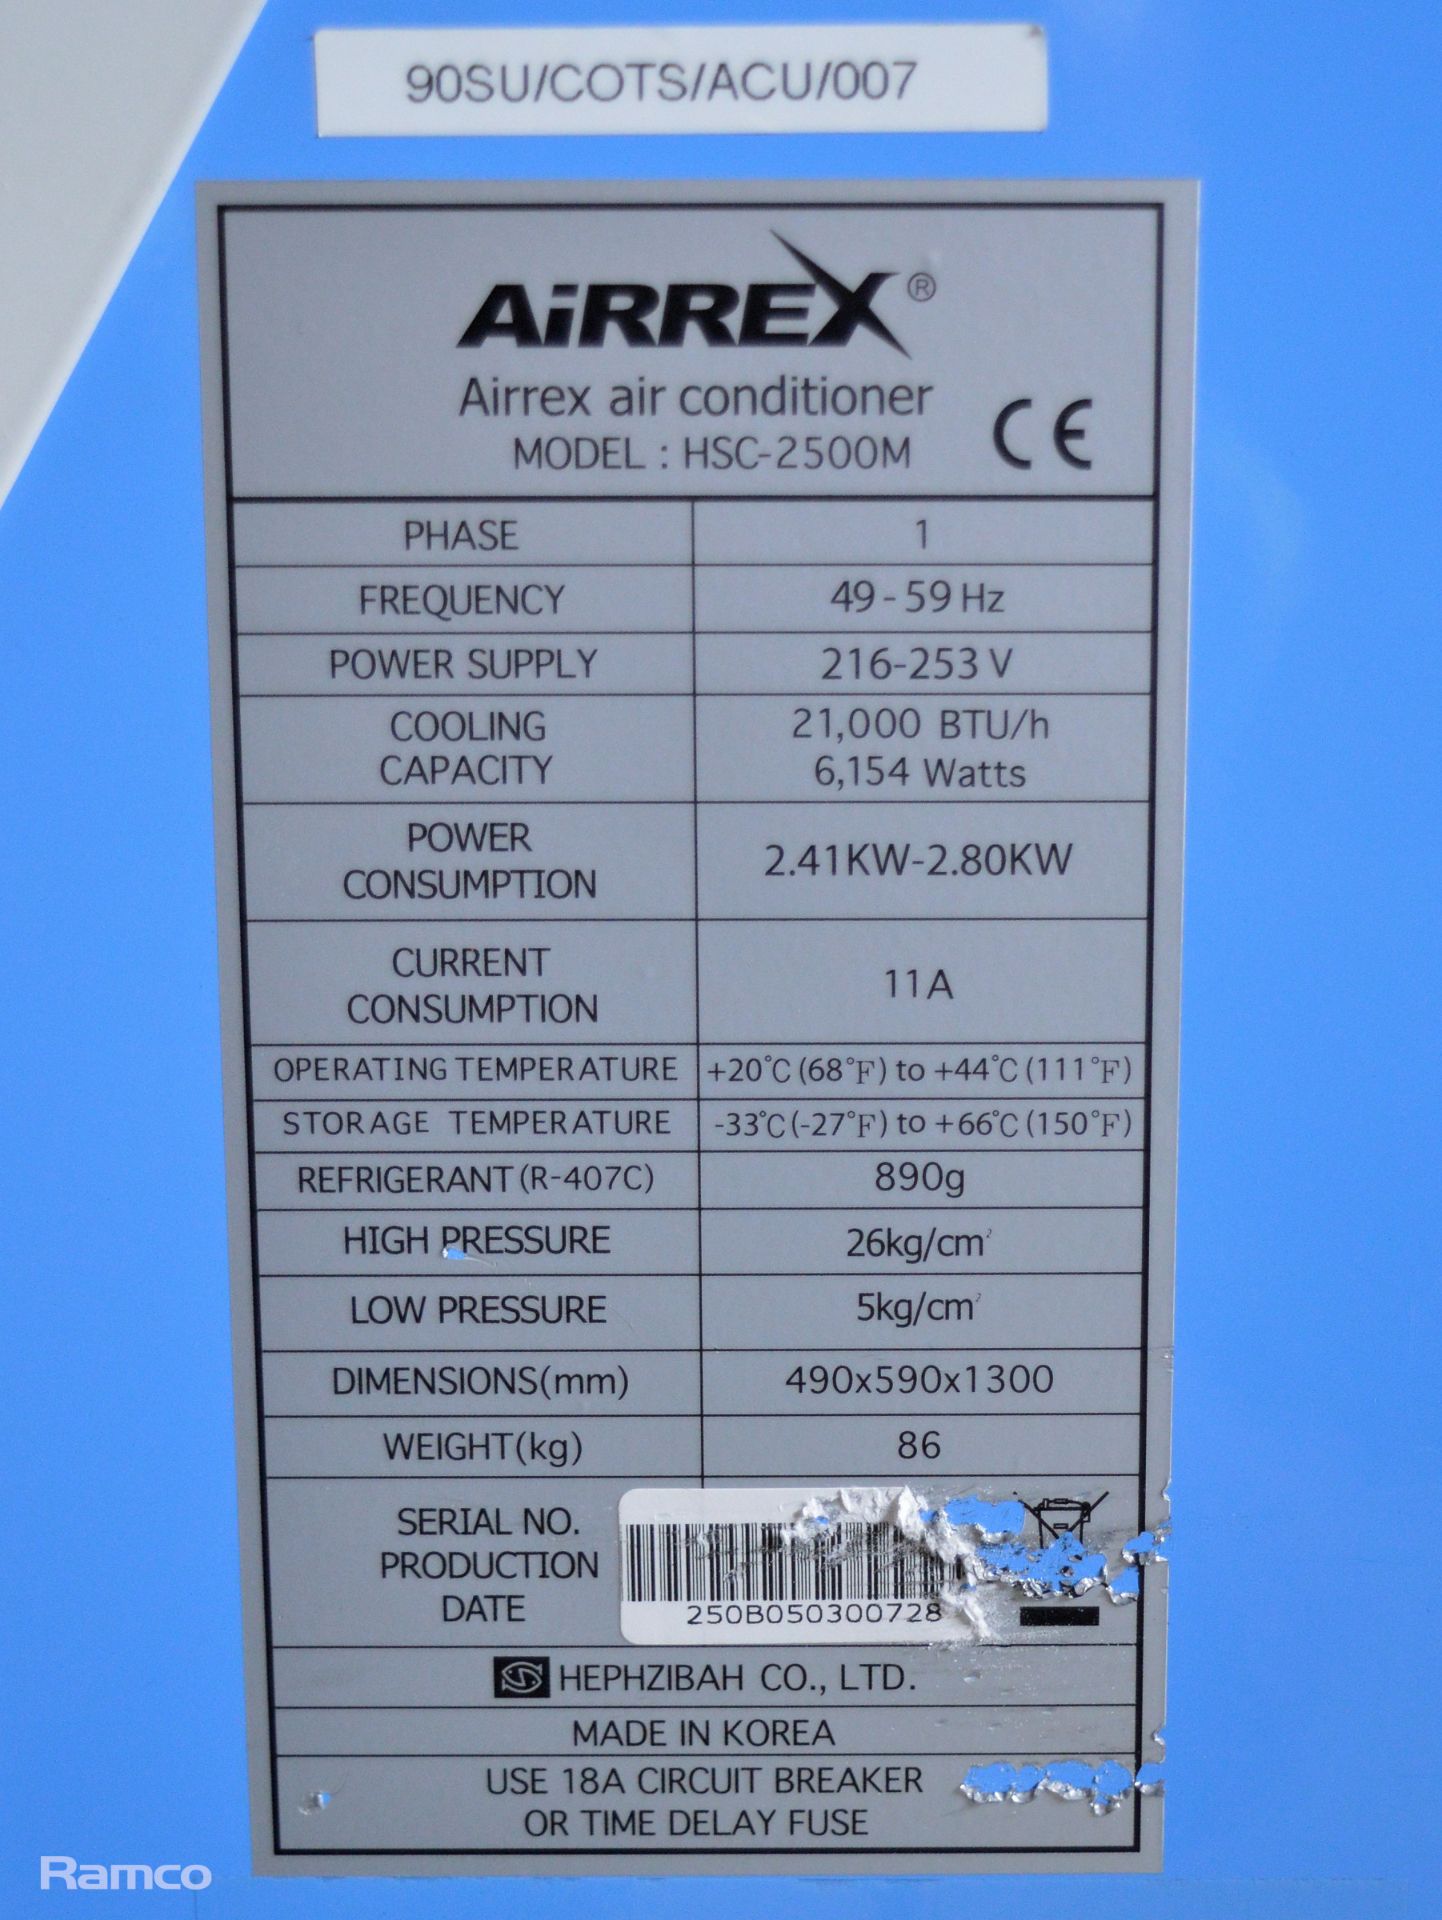 Airrex Aircon Portable air conditioning unit - HSC-2500M - cased L 82 x W 64 x H 172cm - Image 6 of 6